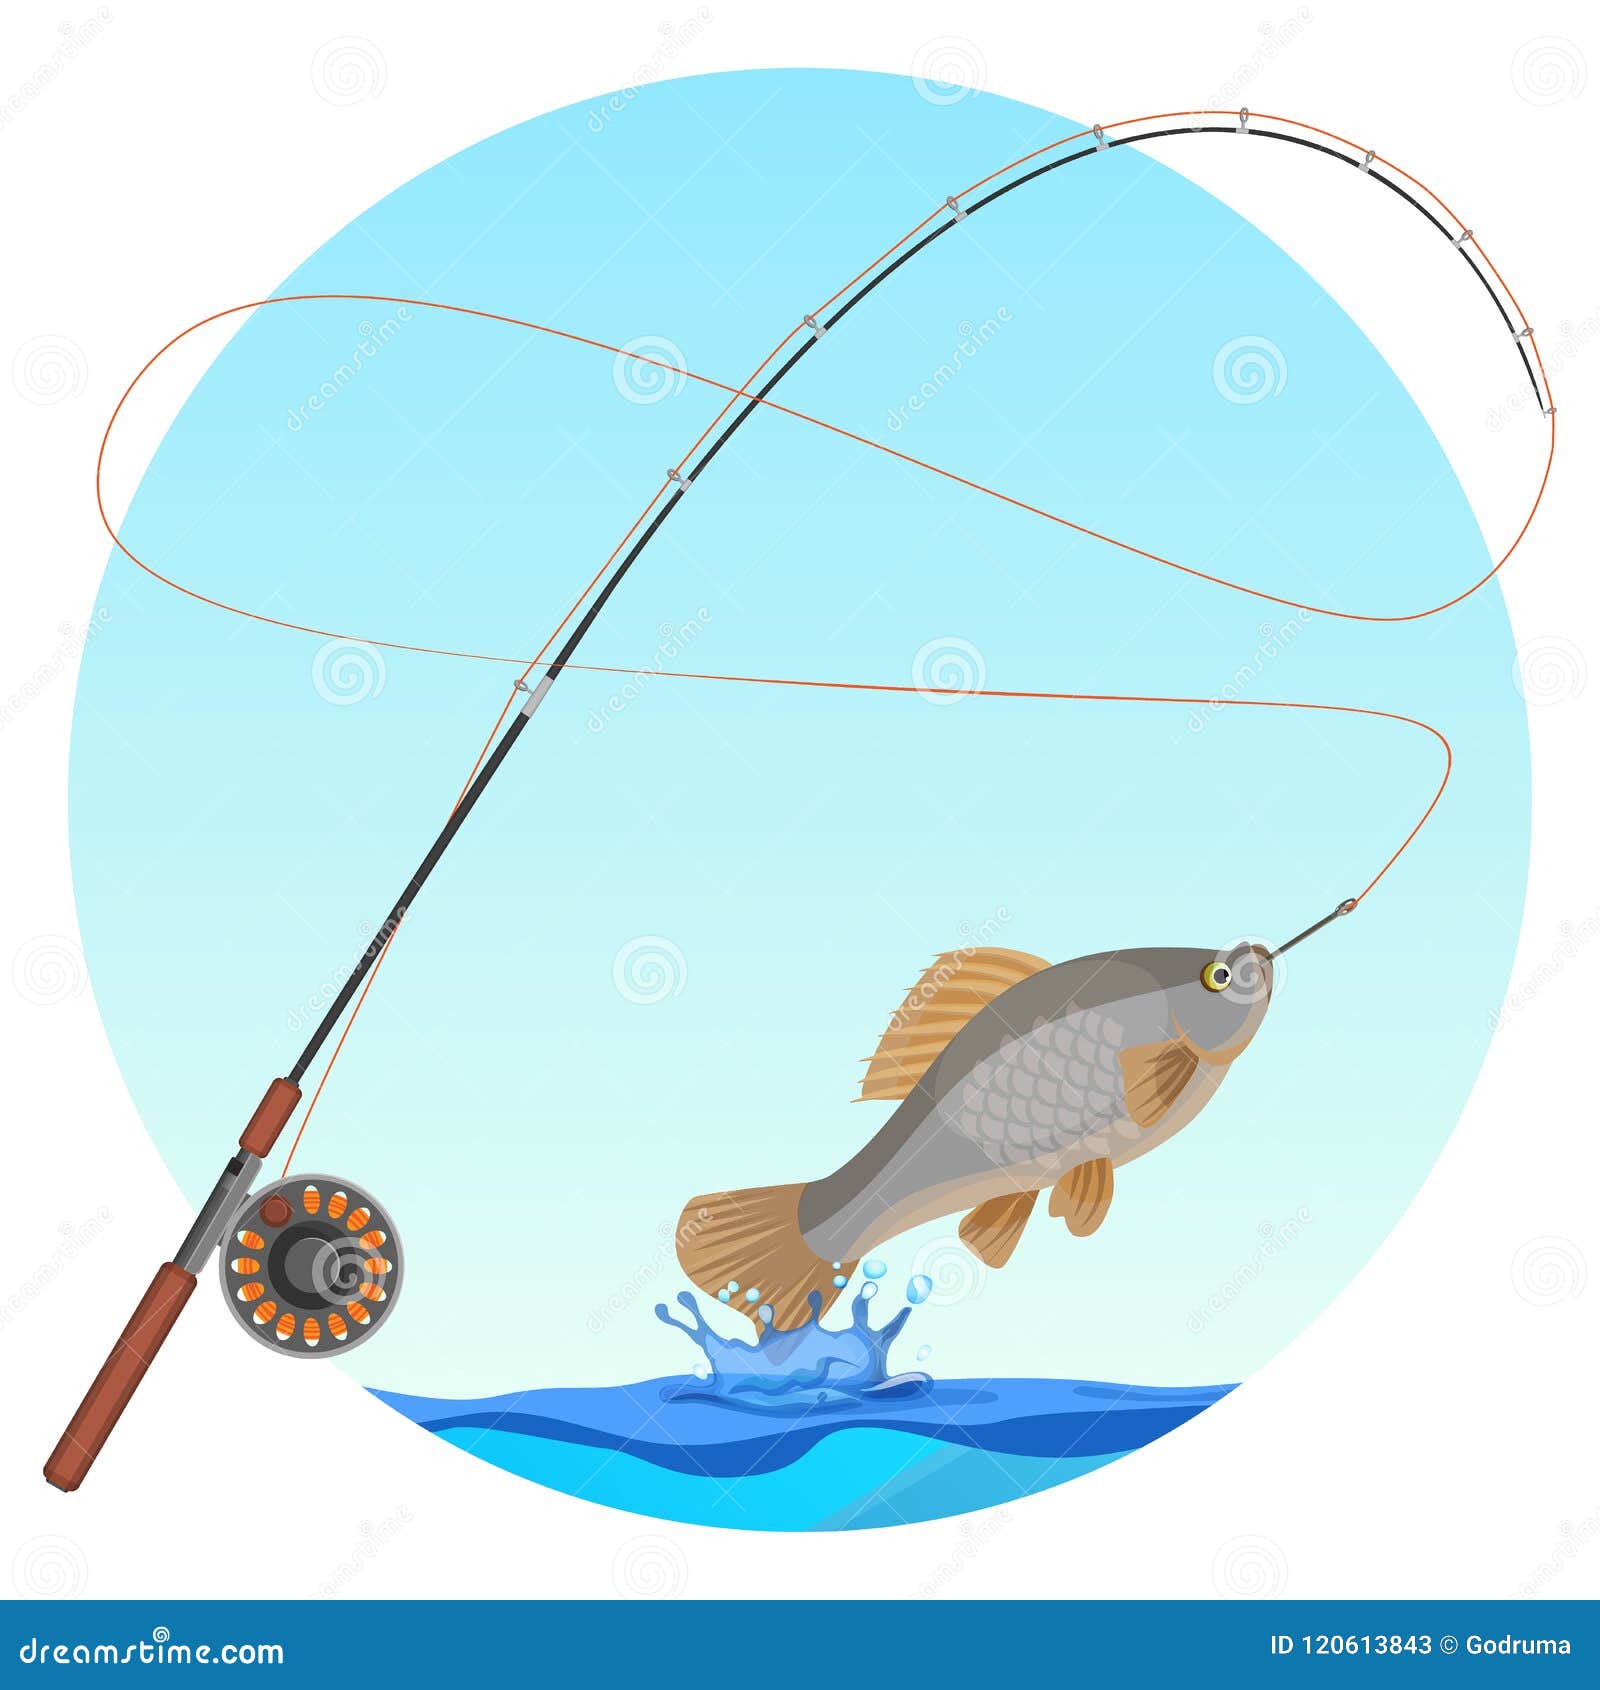 6,700+ Fishing Rod Hook Stock Illustrations, Royalty-Free Vector